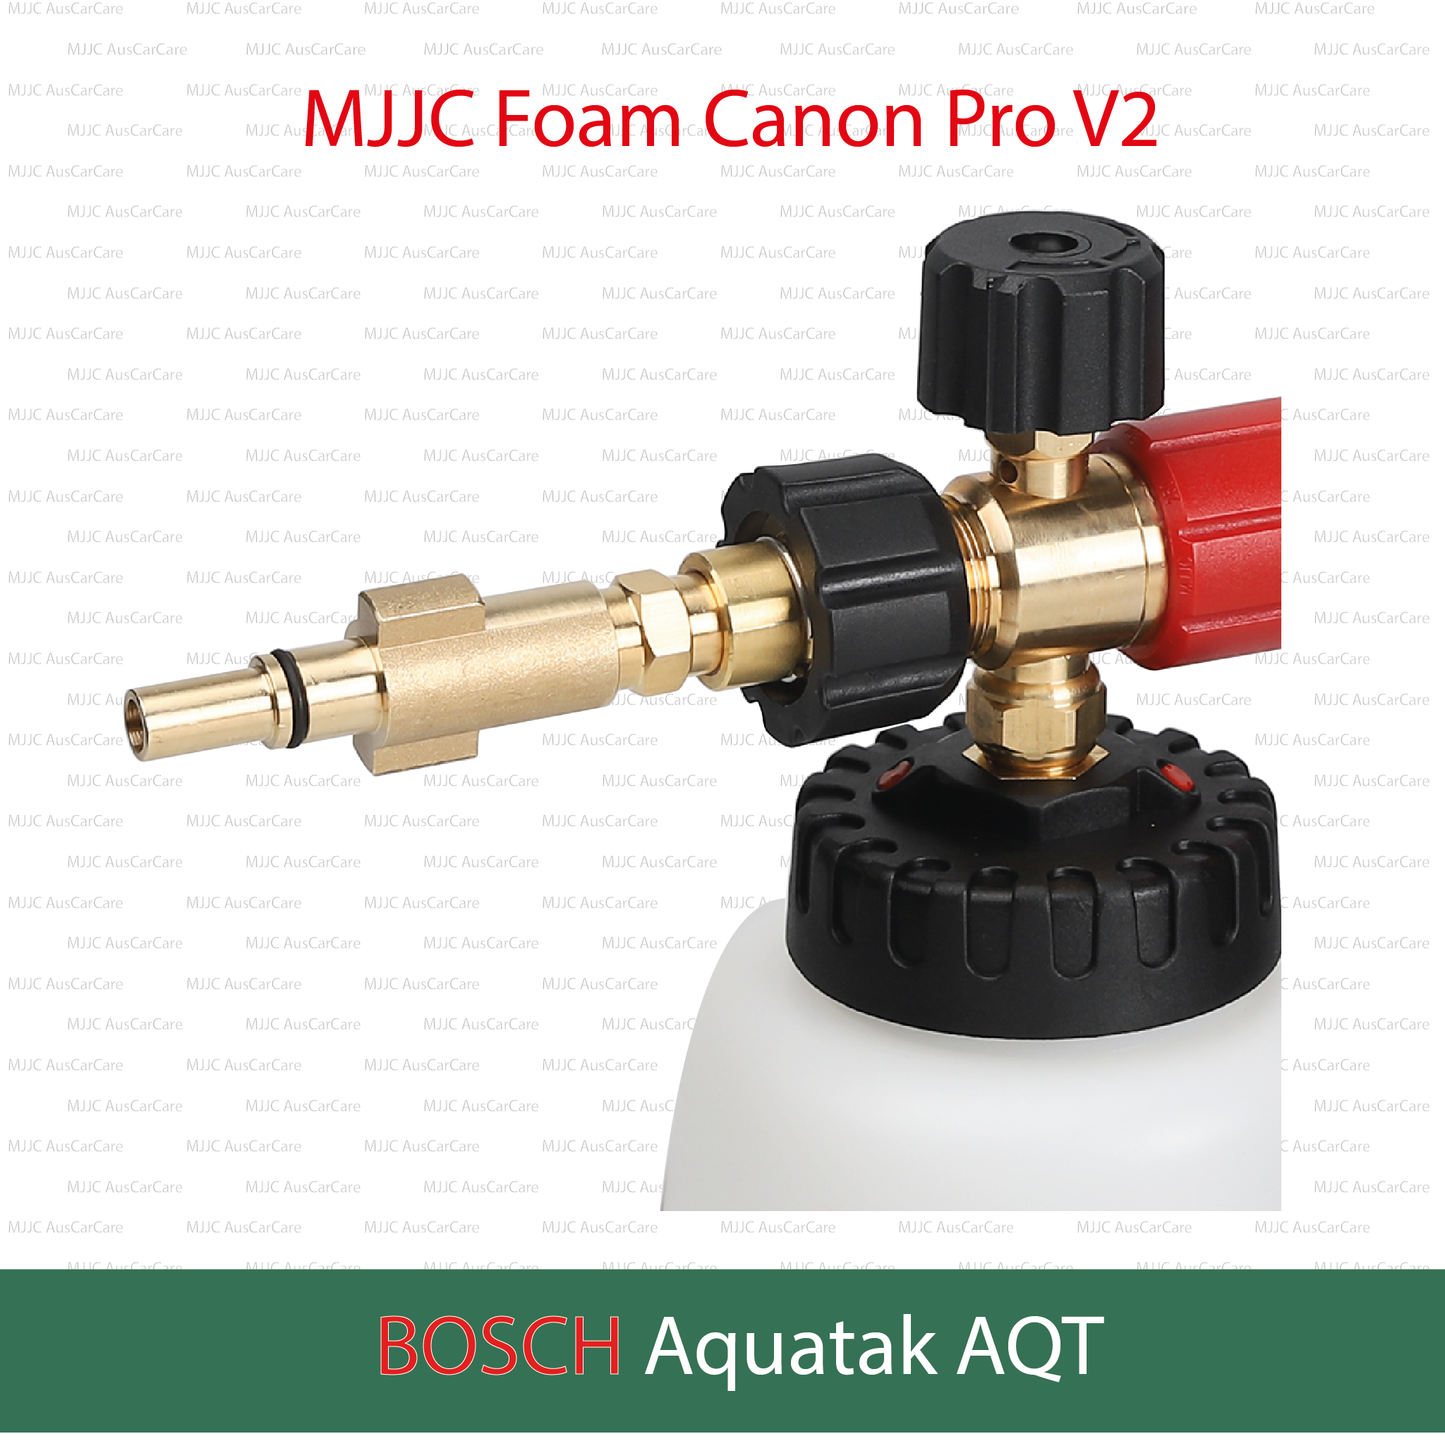 Bosch Aquatak AQT (NBDPROCN) Adapter for MJJC Foam Cannon Pro V2 (NBDFLPRO)